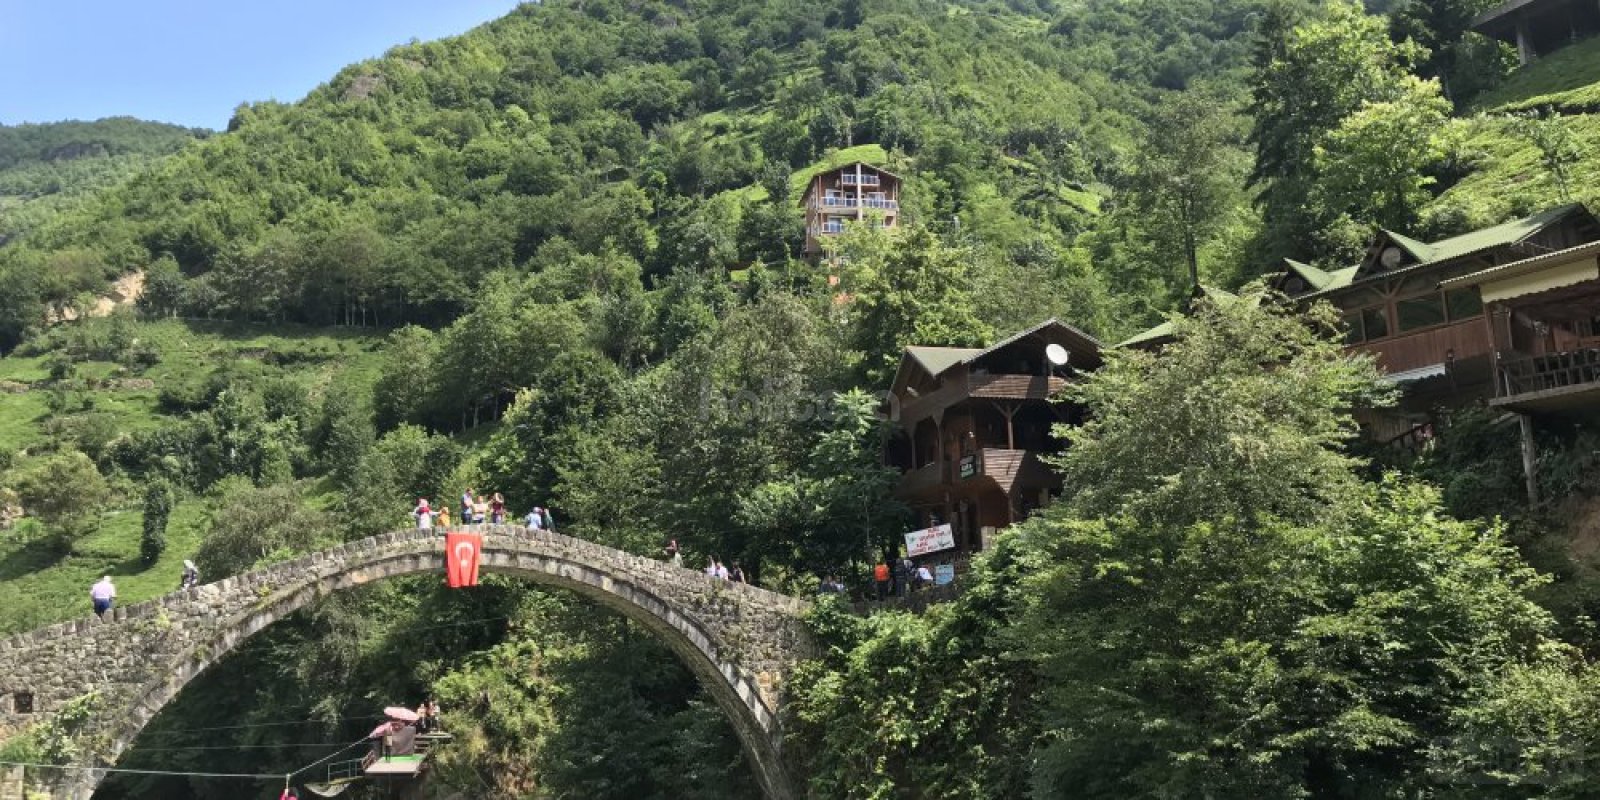 Trabzon ayder yaylası ve rafting turu